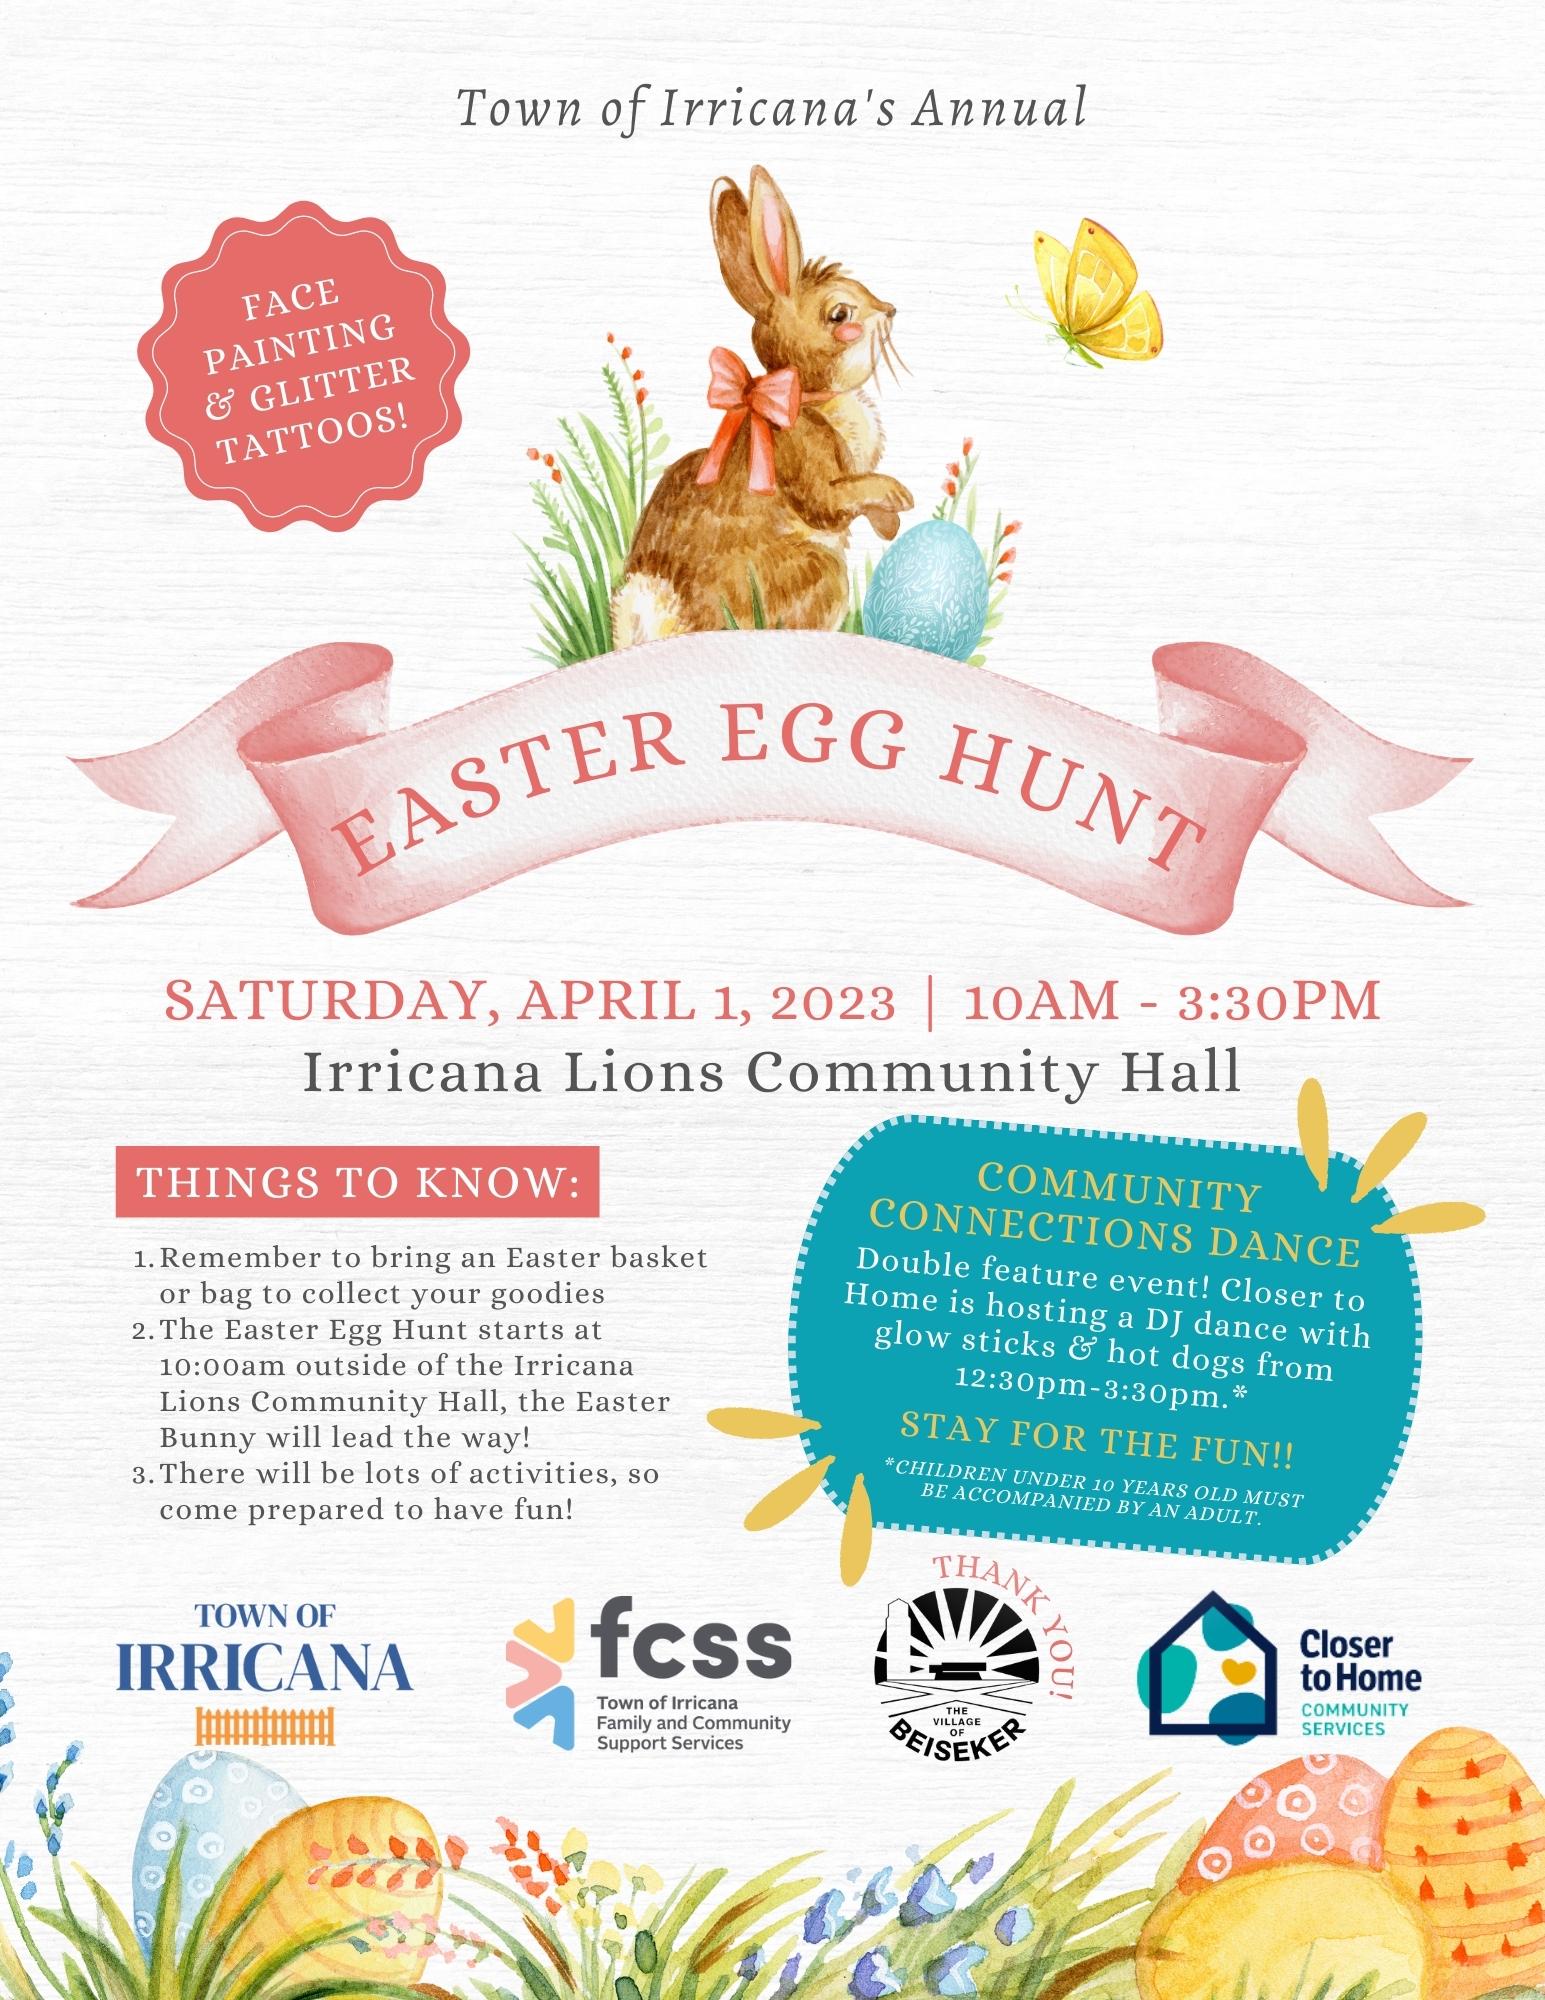 Town of Irricana Annual Easter Egg Hunt 2023 Volunteers needed